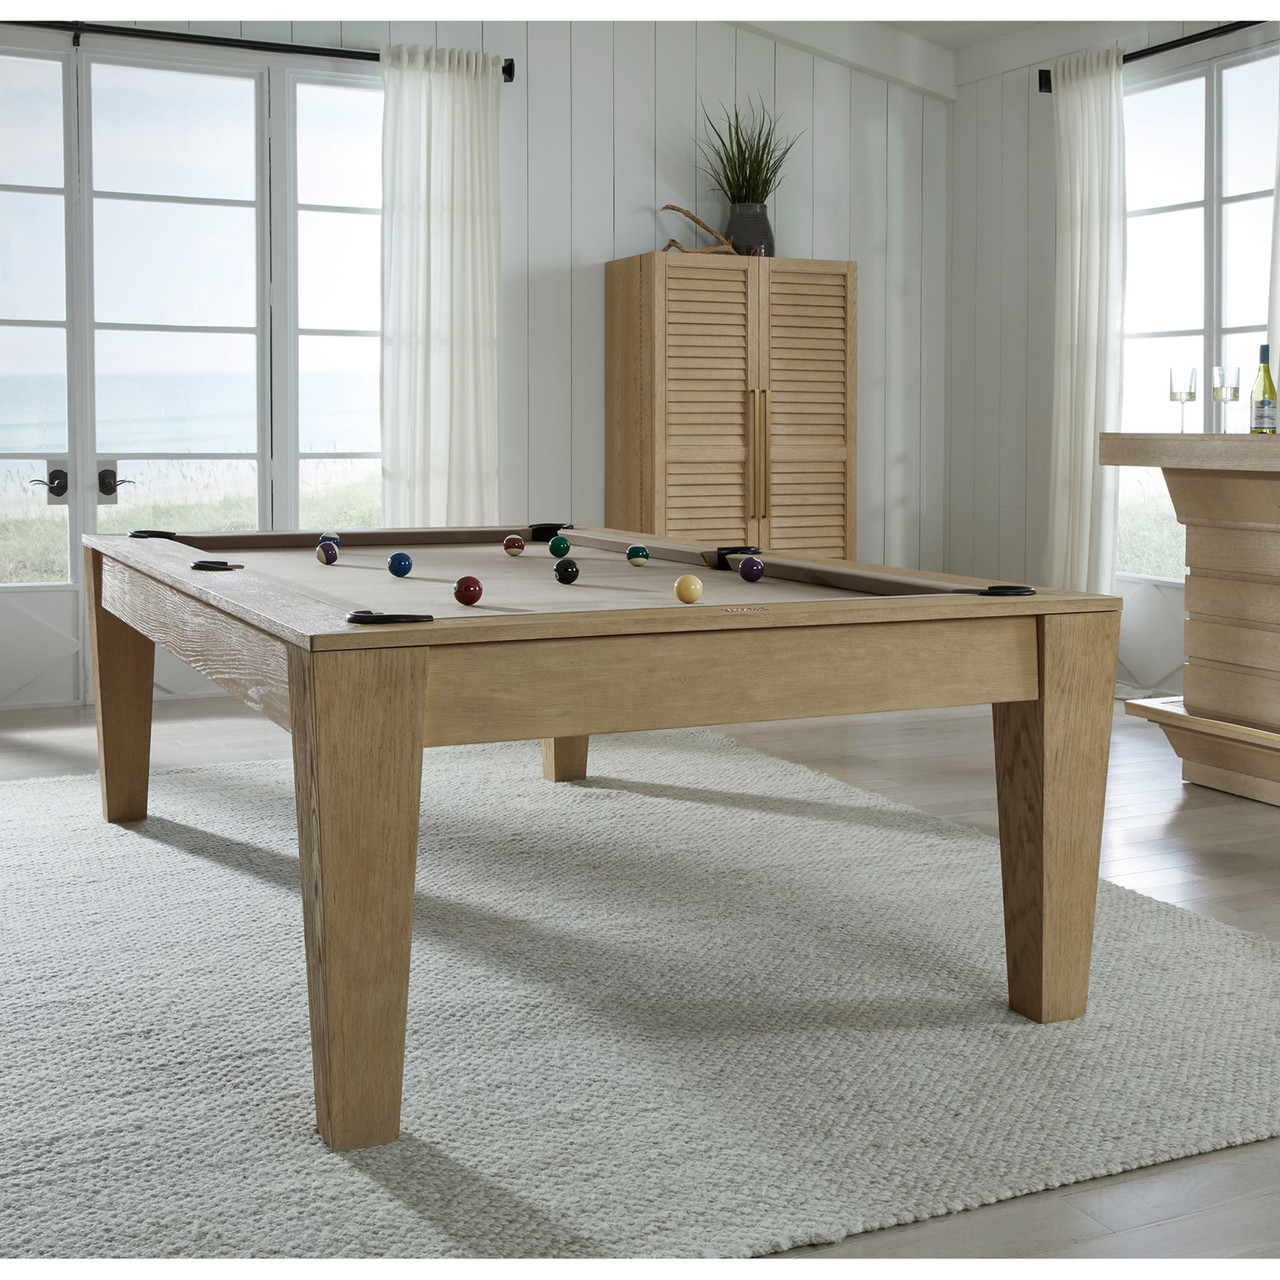 Port Royal 8' Billiard Table - White Oak